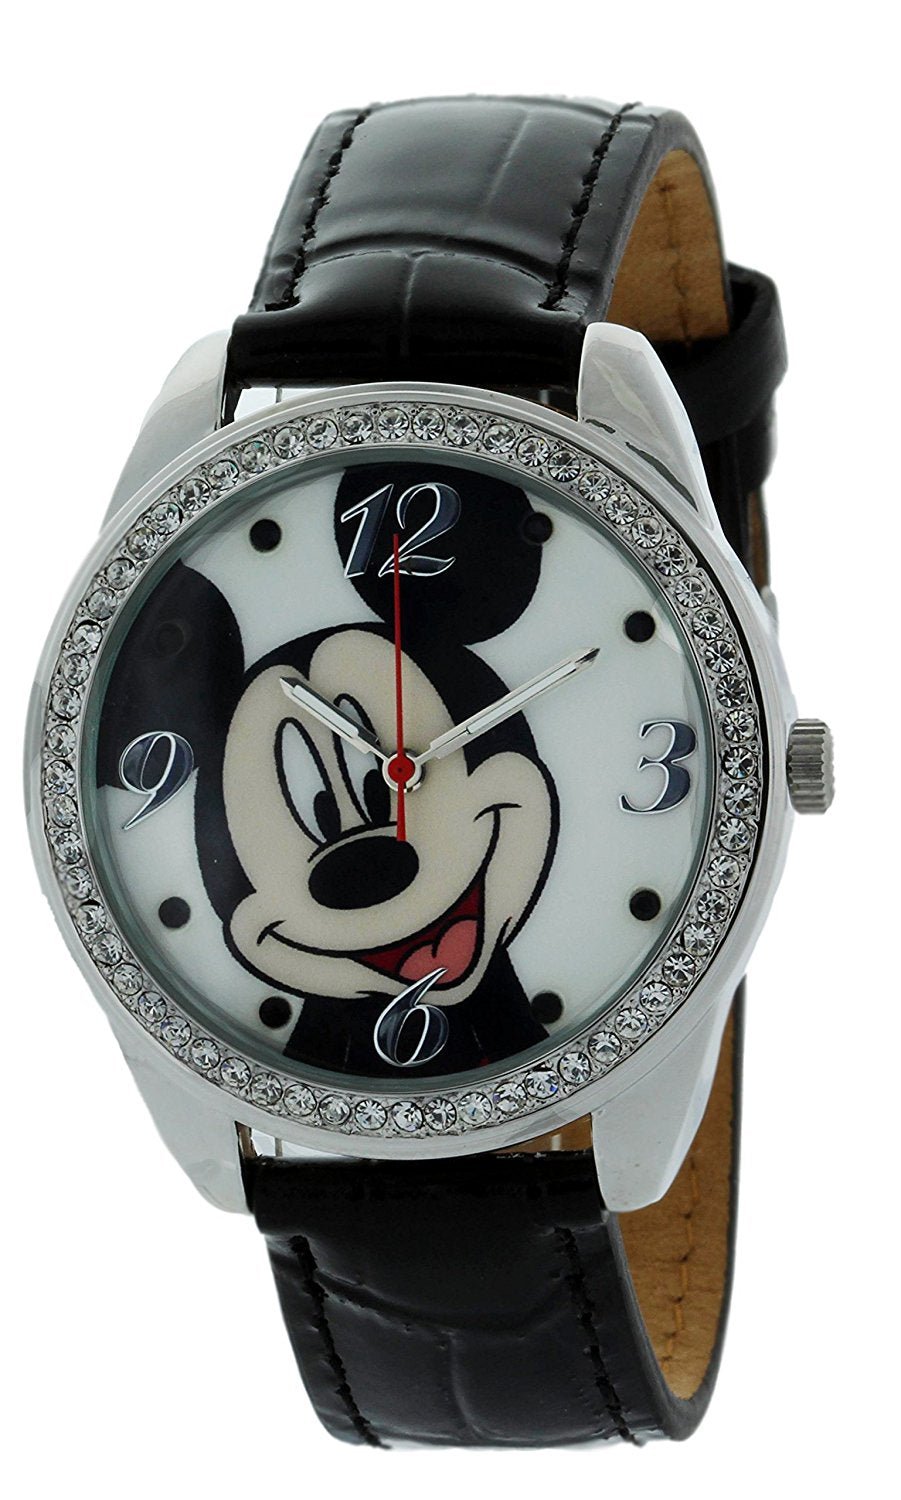 Model: JUMBO Disney Mickey Mouse Watch with Stone Bezel